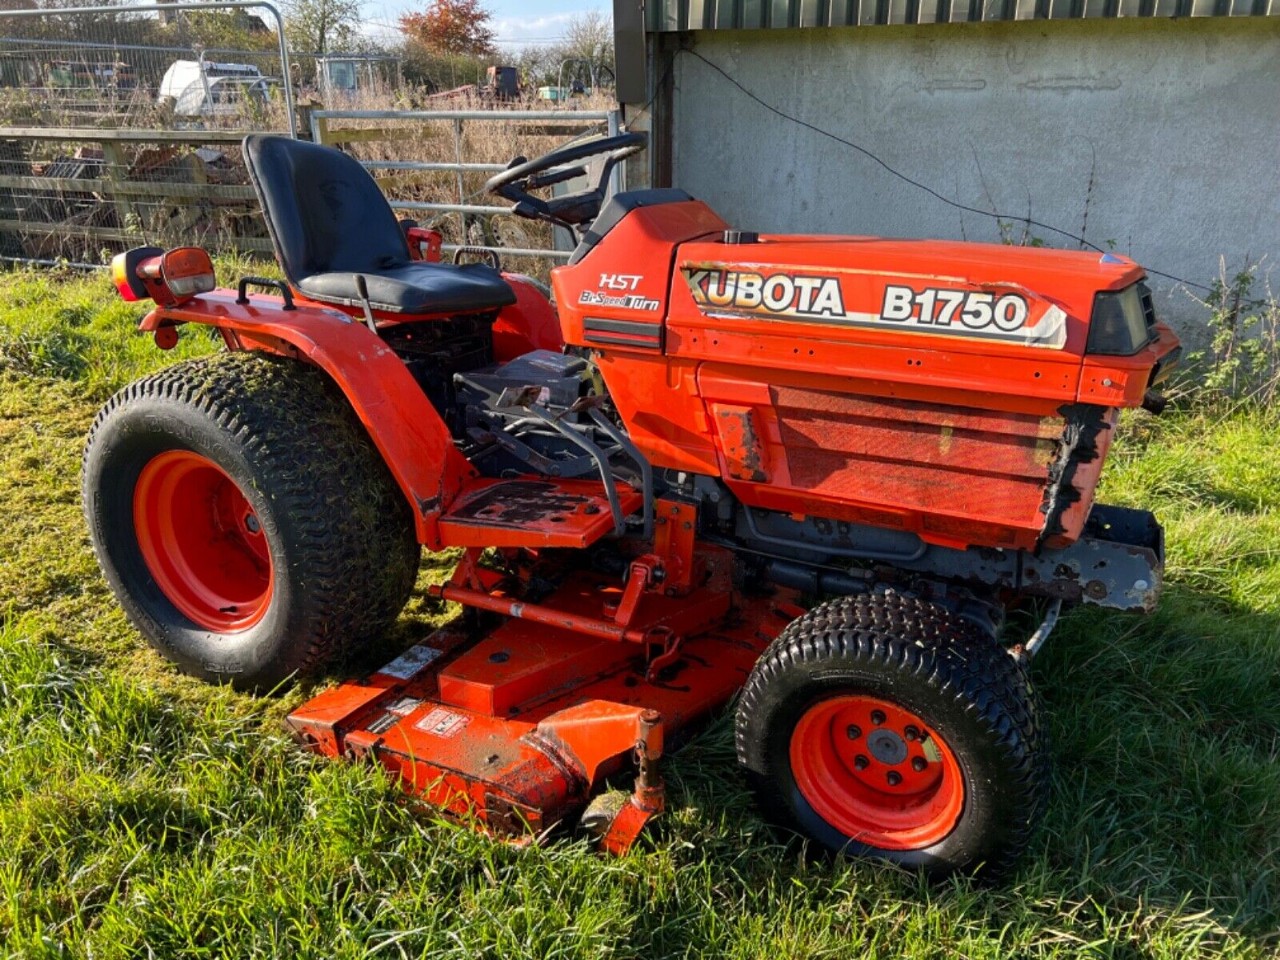 To fix a hydraulic malfunction on a Kubota B1750 tractor